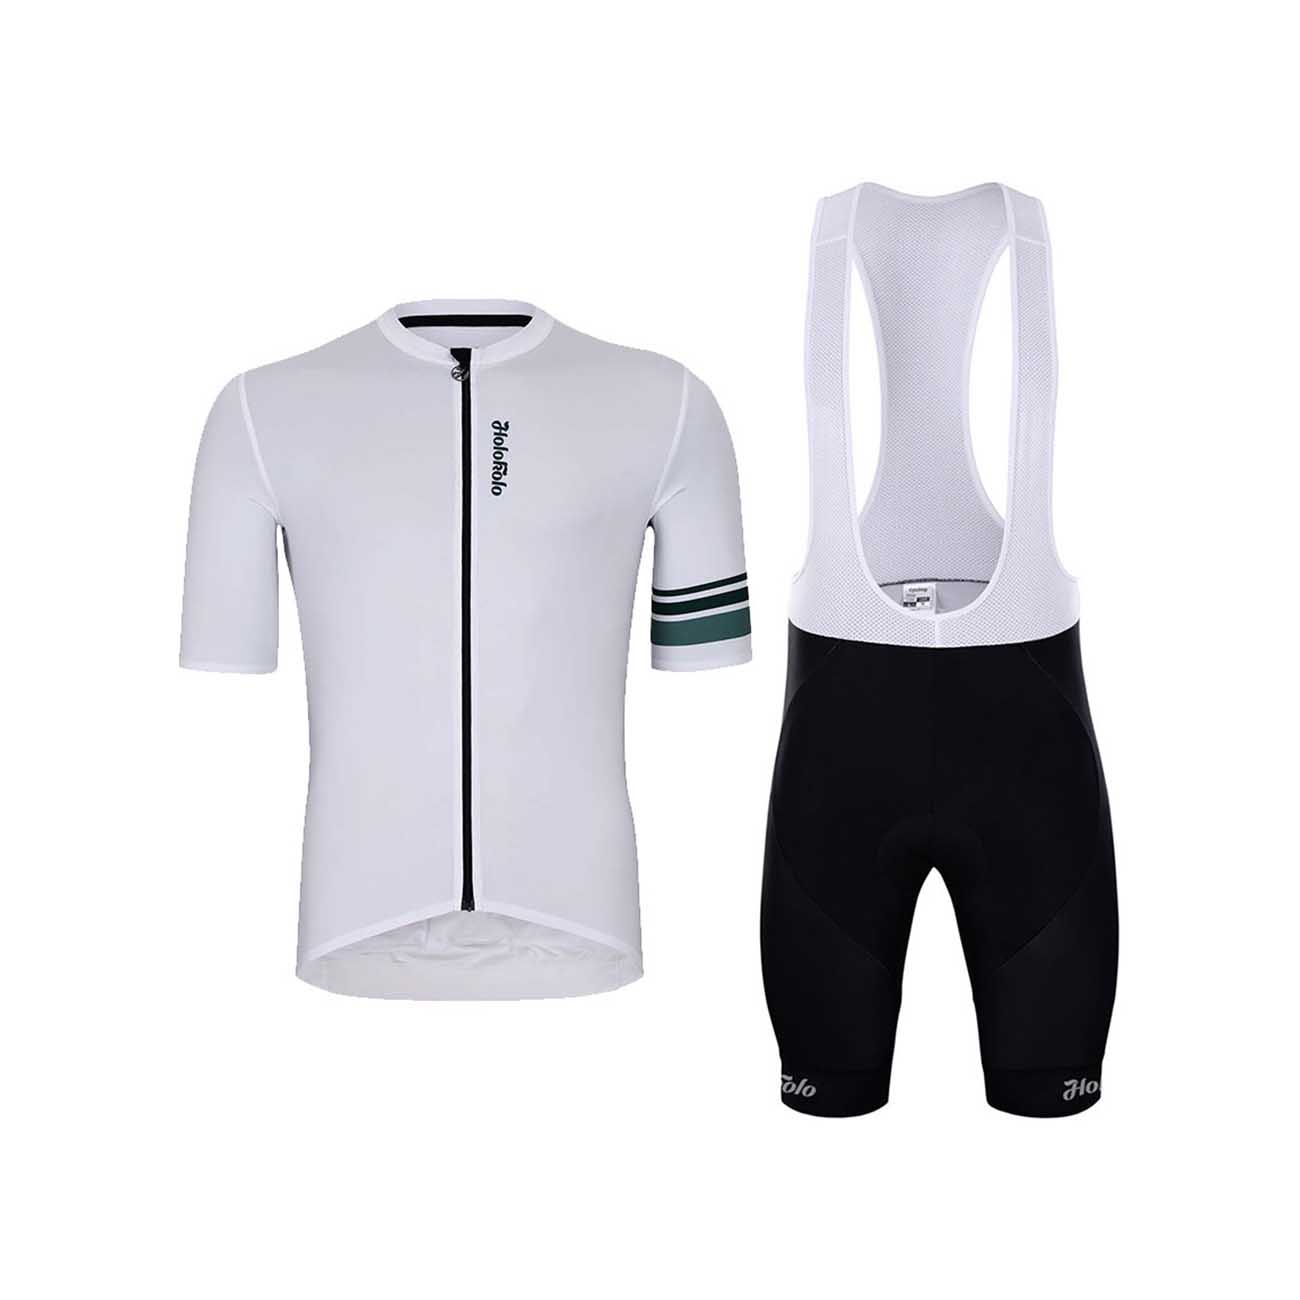 
                HOLOKOLO Cyklistický krátký dres a krátké kalhoty - HONEST ELITE - bílá/černá
            